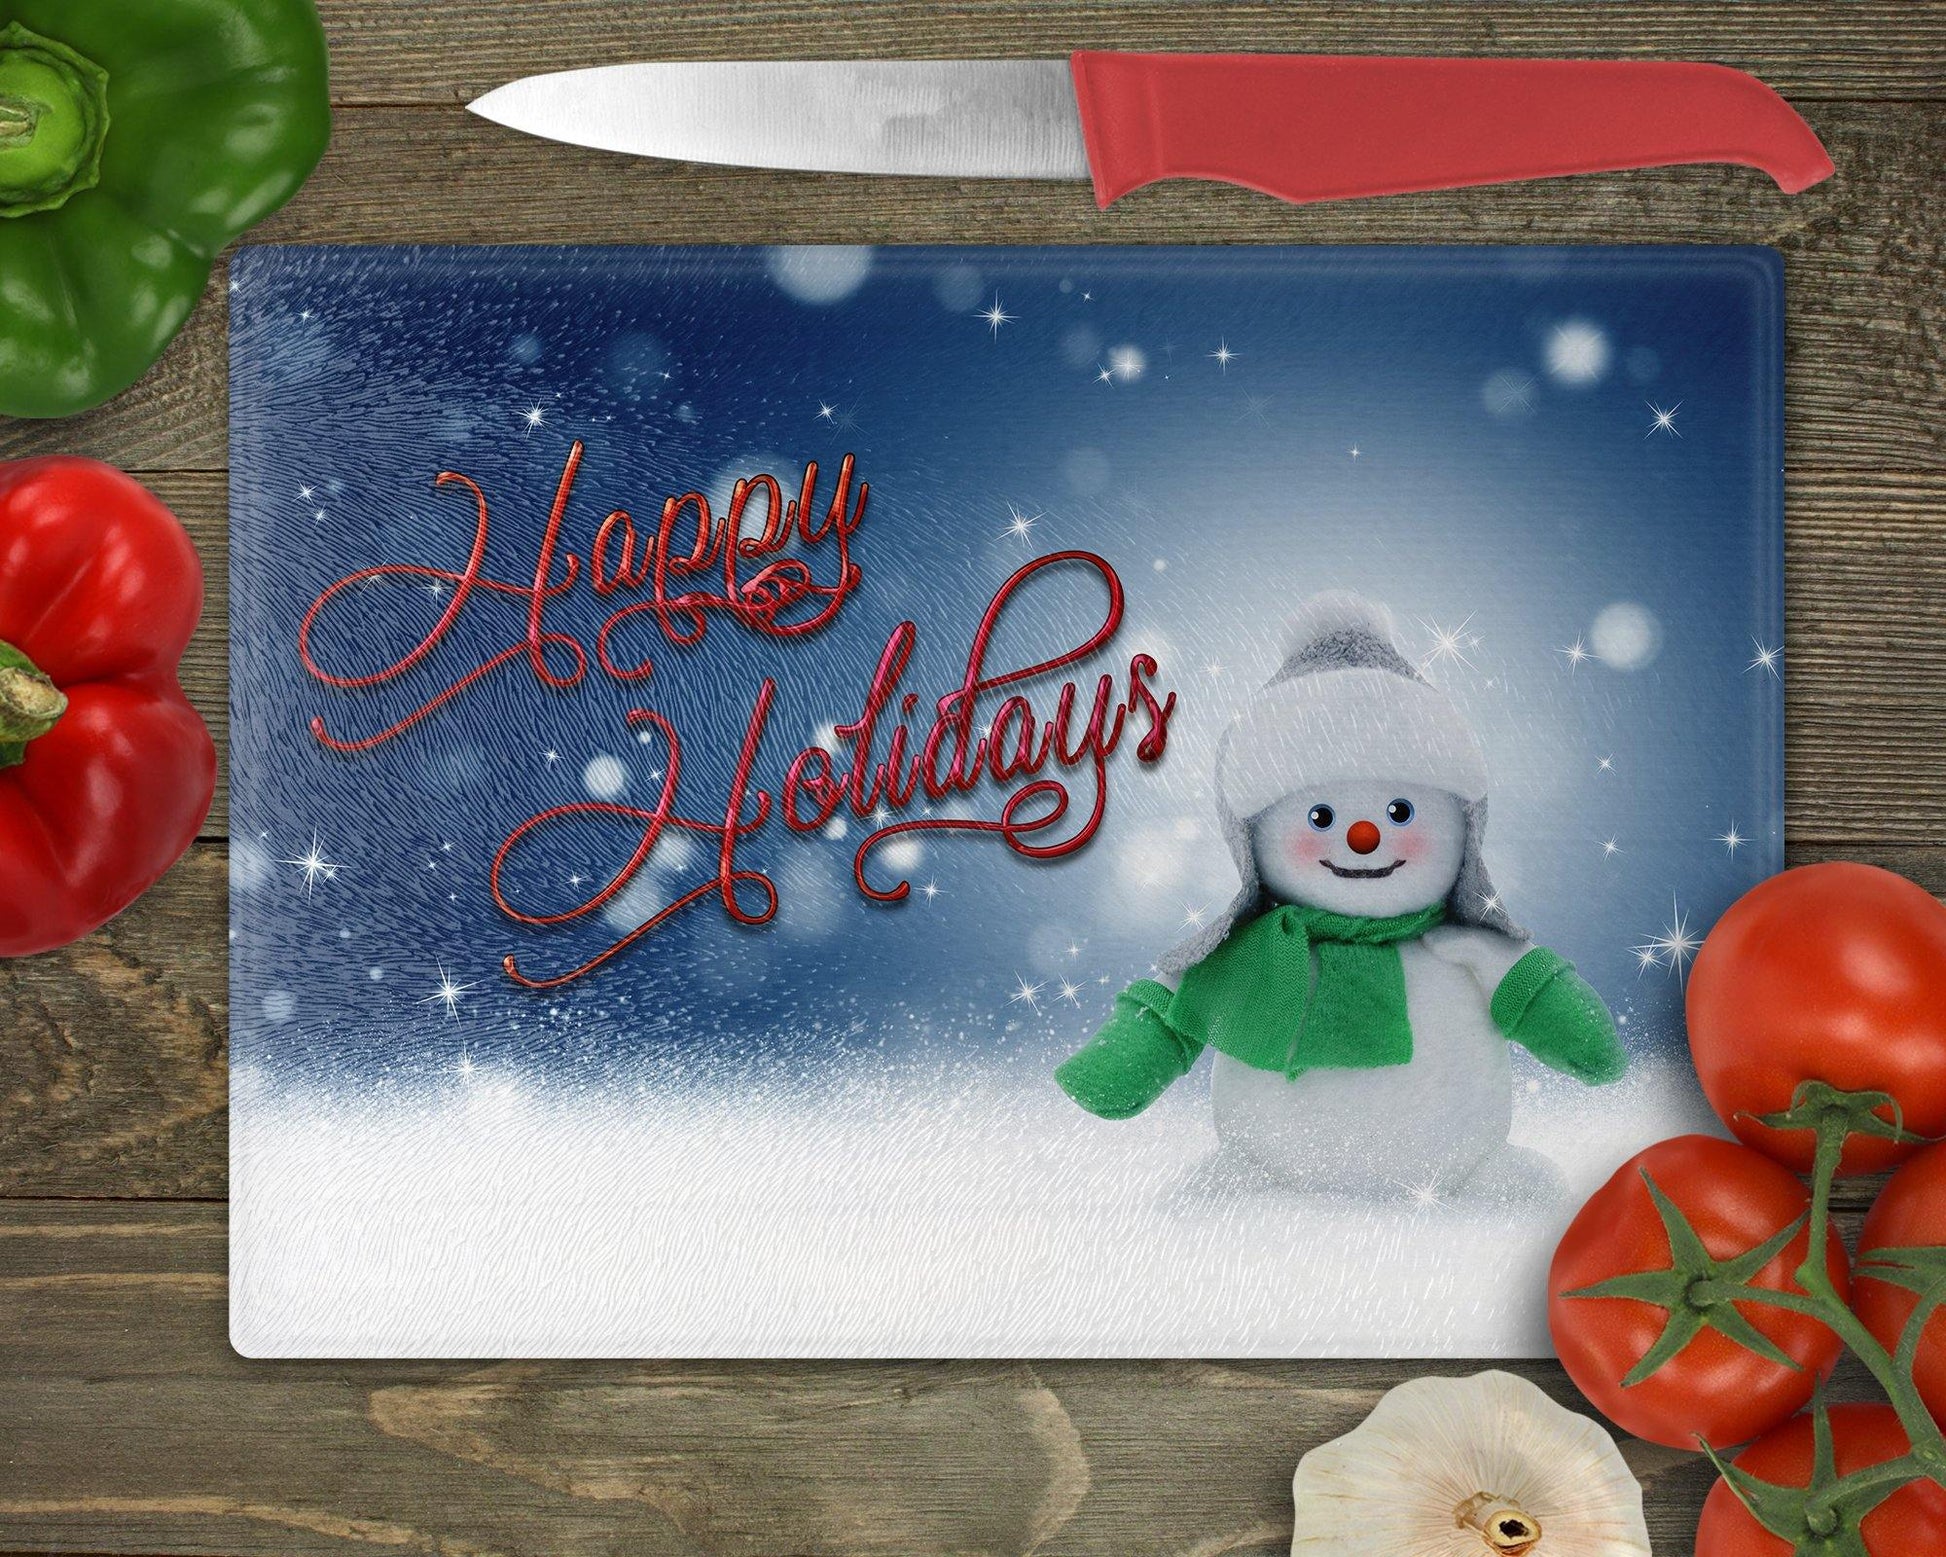 Happy Holidays Snowman Cutout Glass Cutting Board - Schoppix Gifts